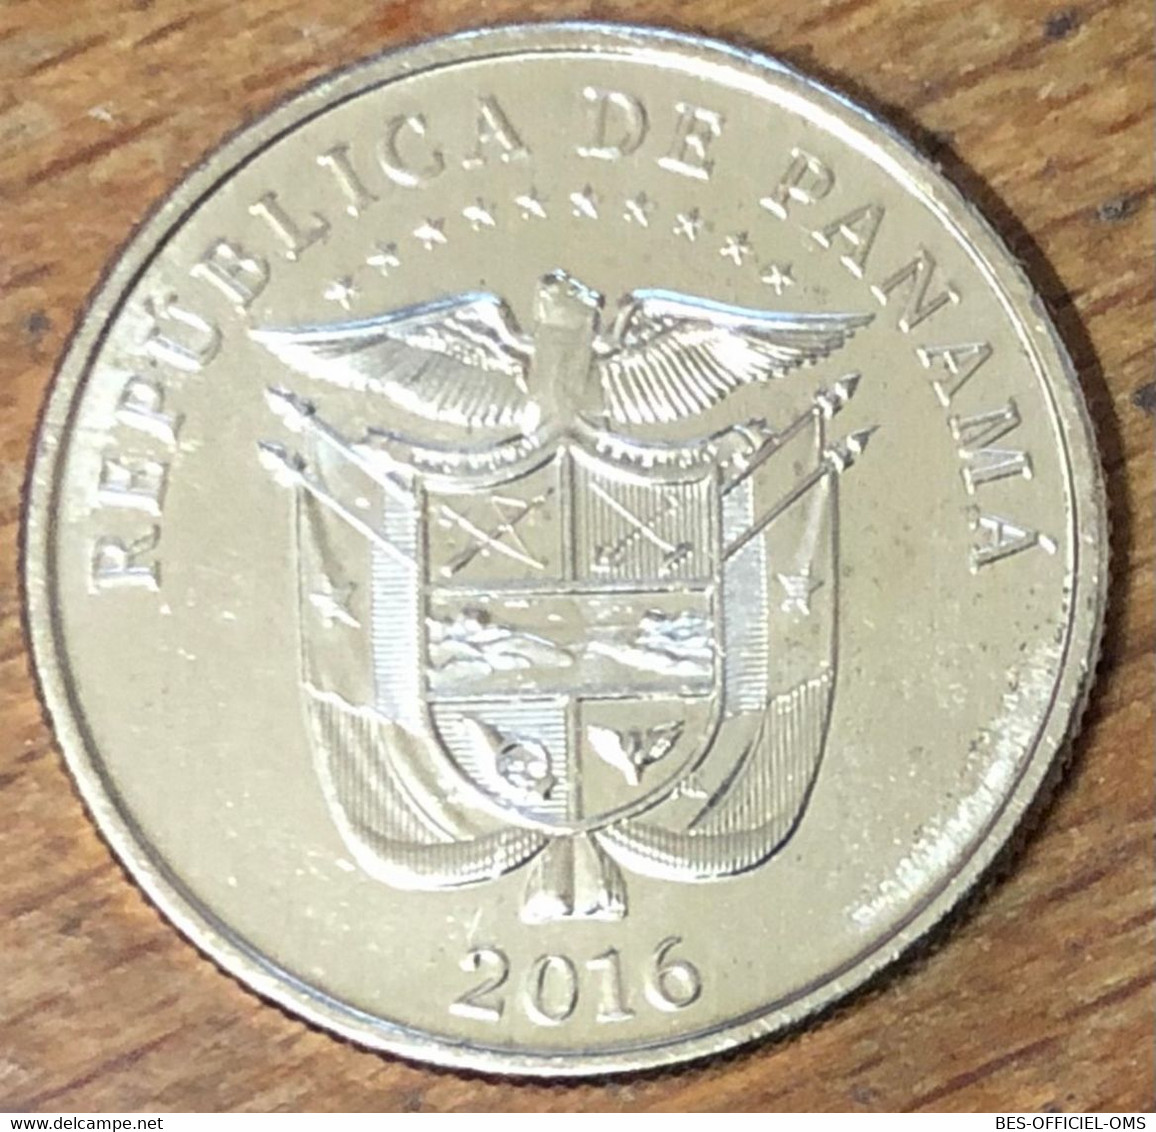 PANAMA MONNAIE UN CUARTO DE BALBOA 2016 CANAL DE PANAMA MÉDAILLE JETON TOURISTIQUE MEDALS TOKENS COINS - Other - America